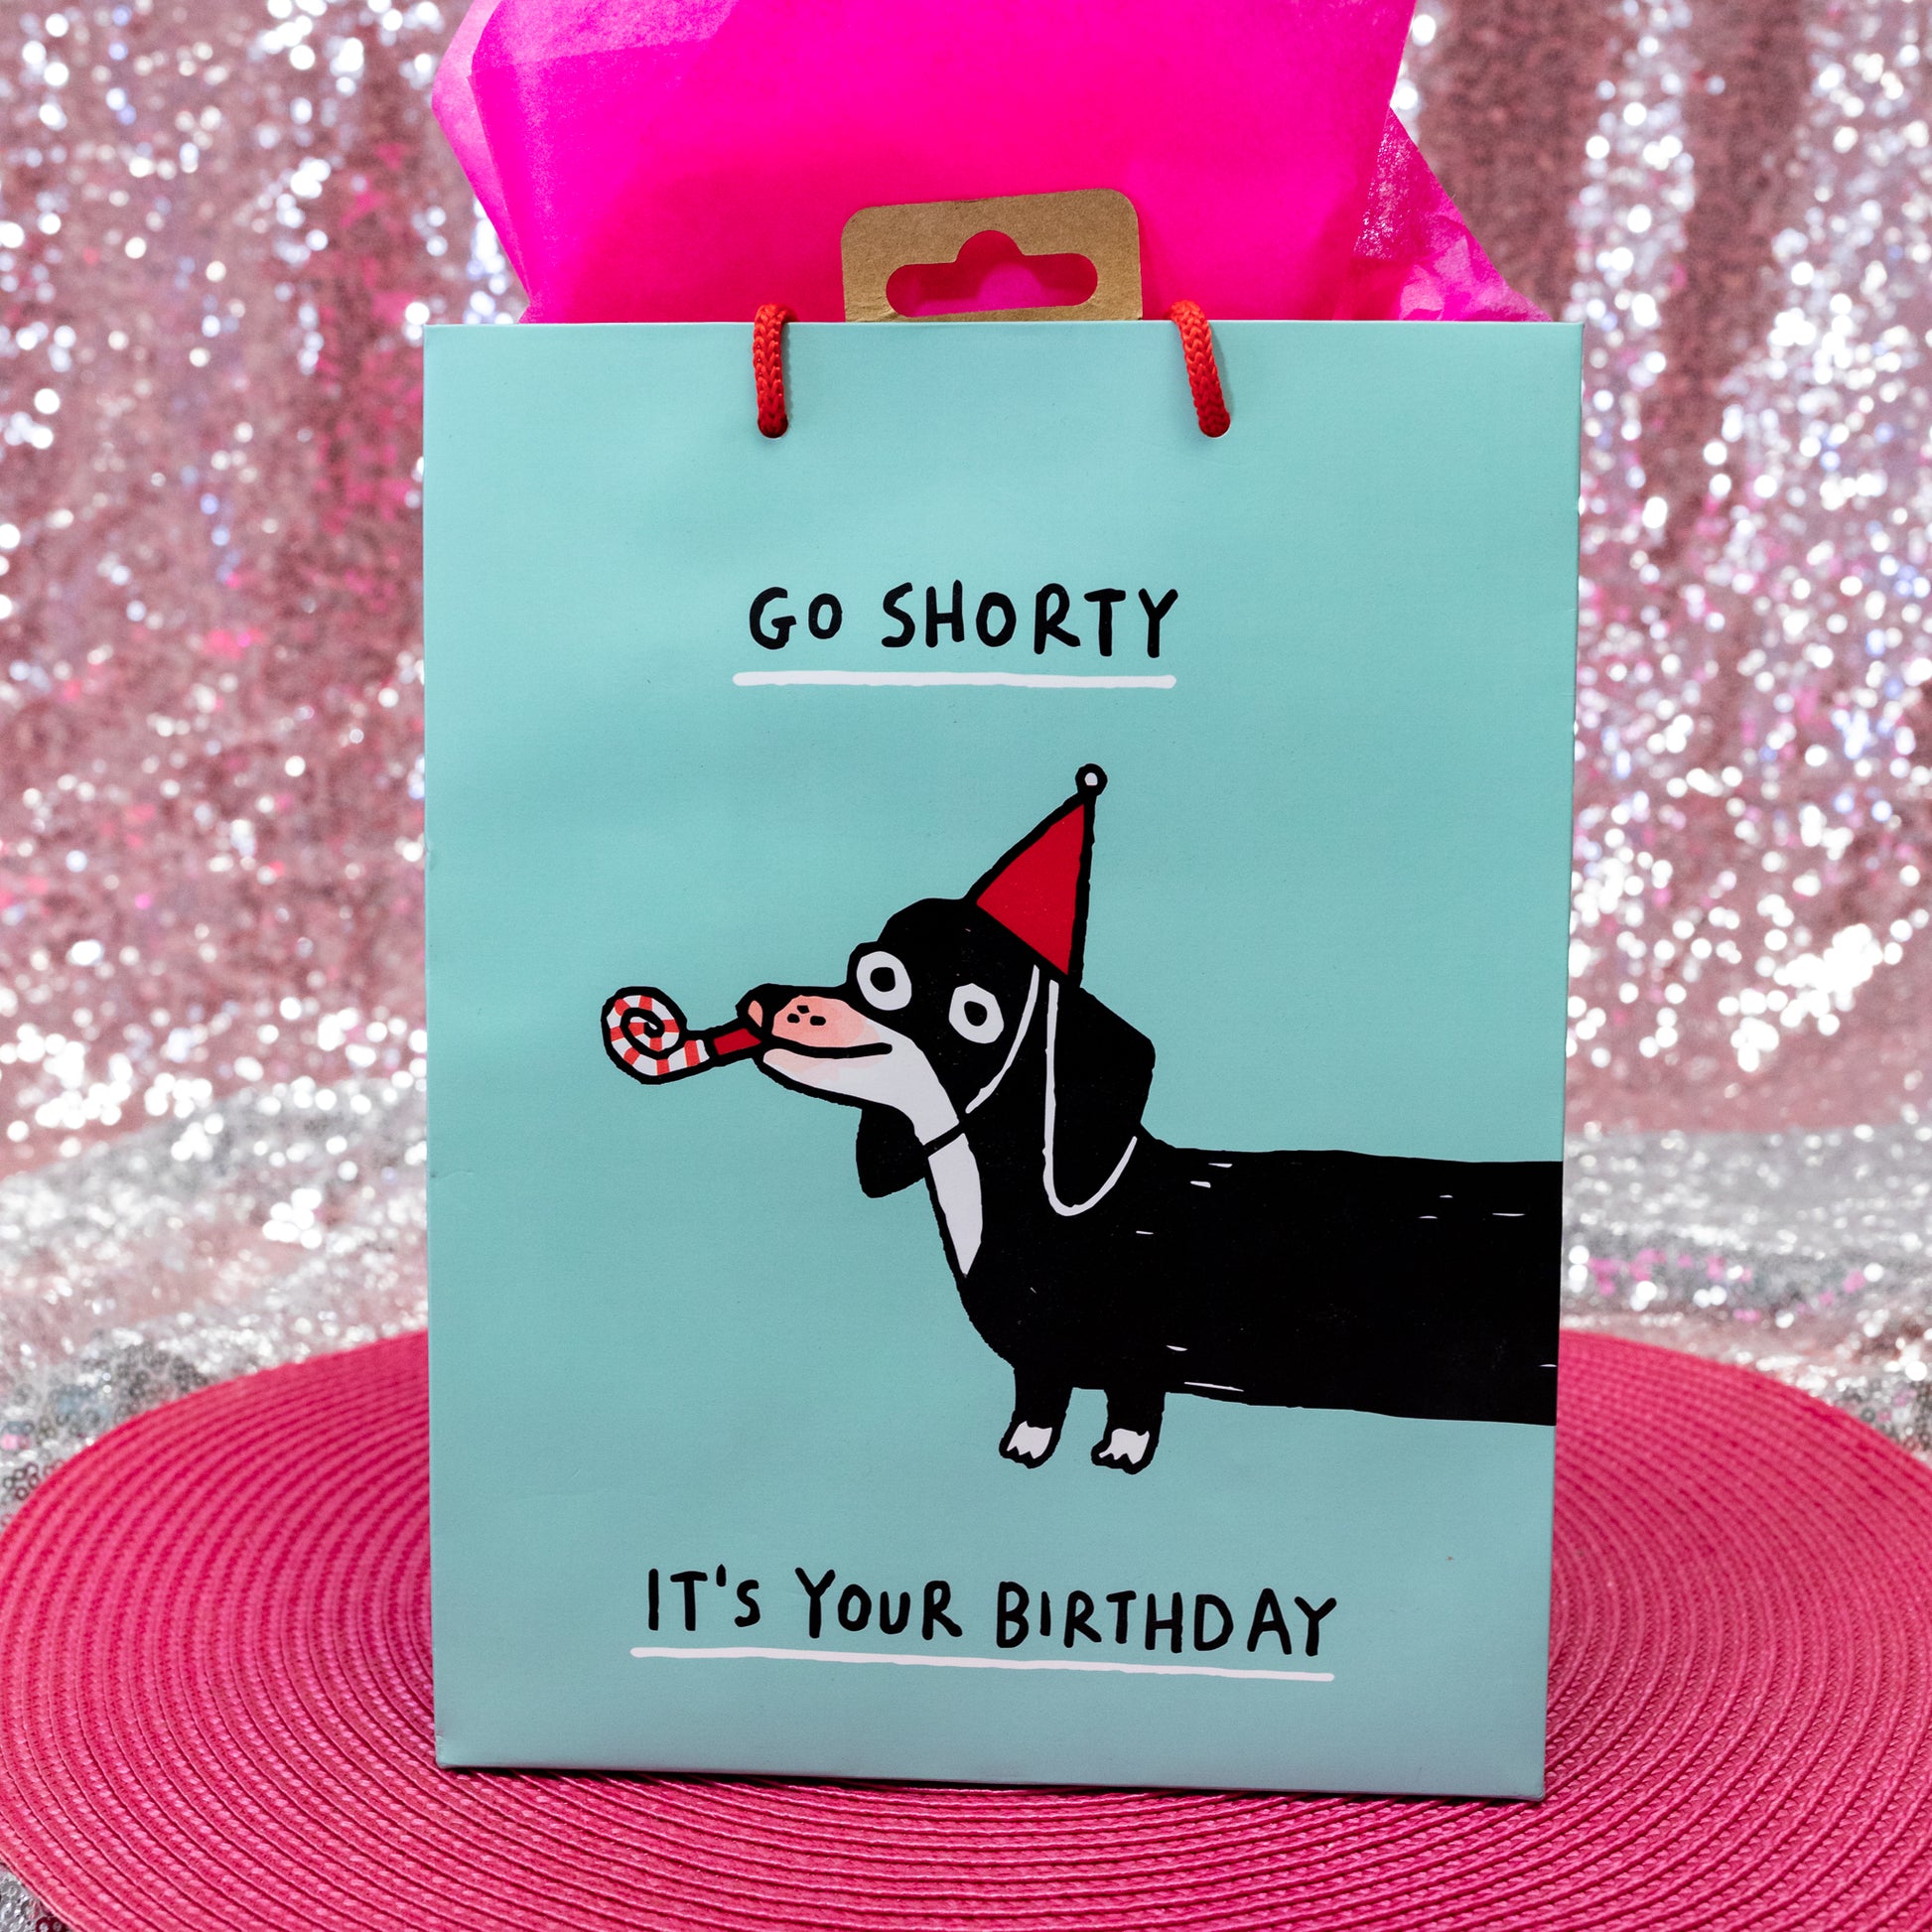 Go Shawty It's Your Birthday Card